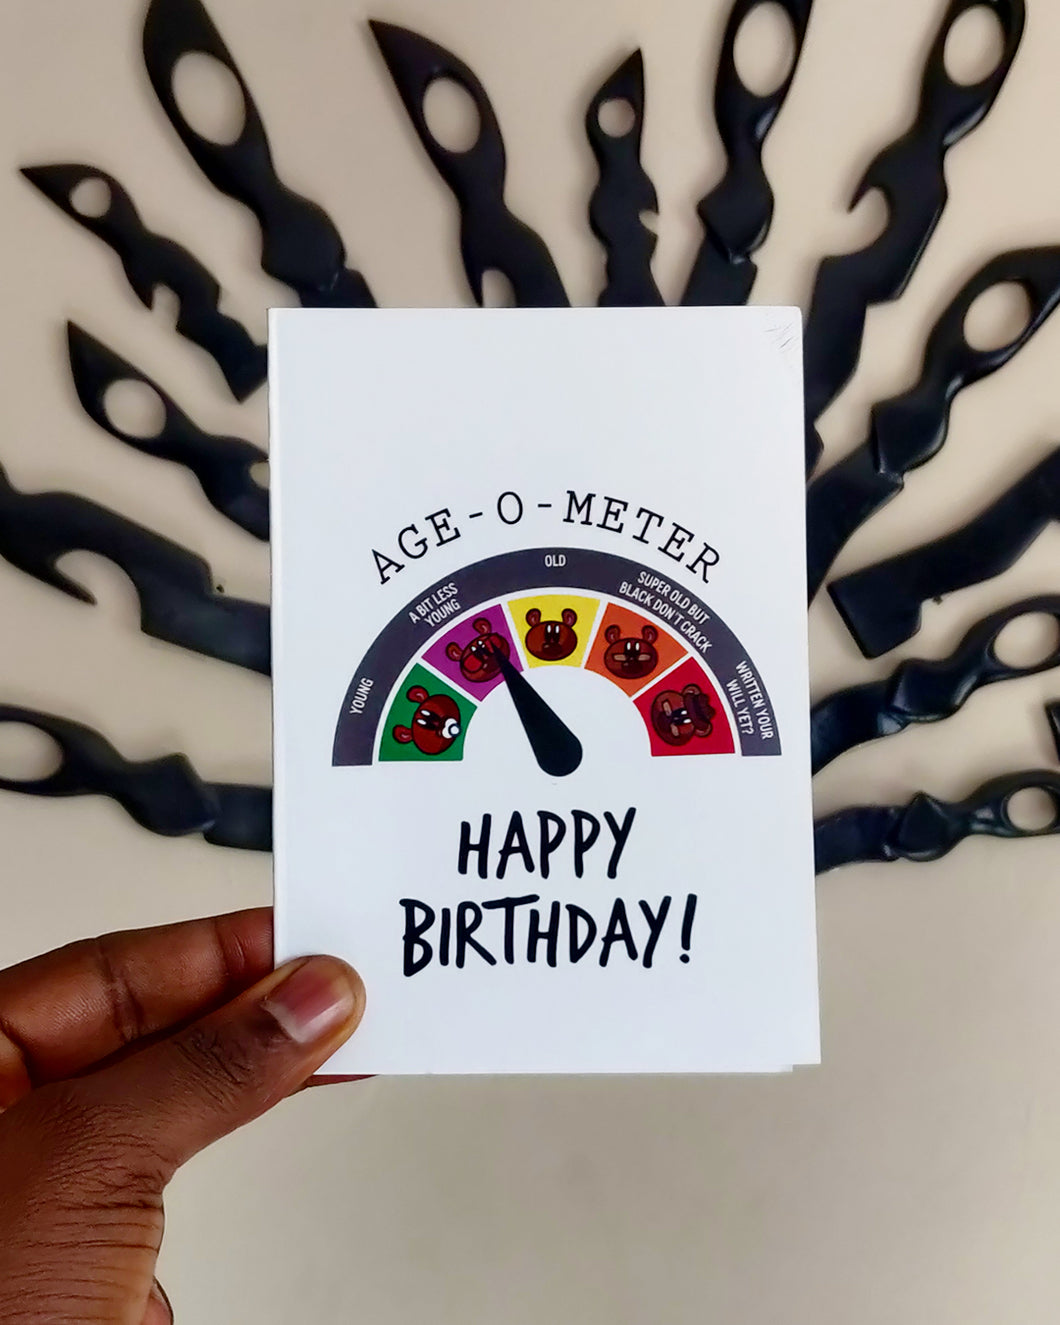 Birthday card - Age-o-meter